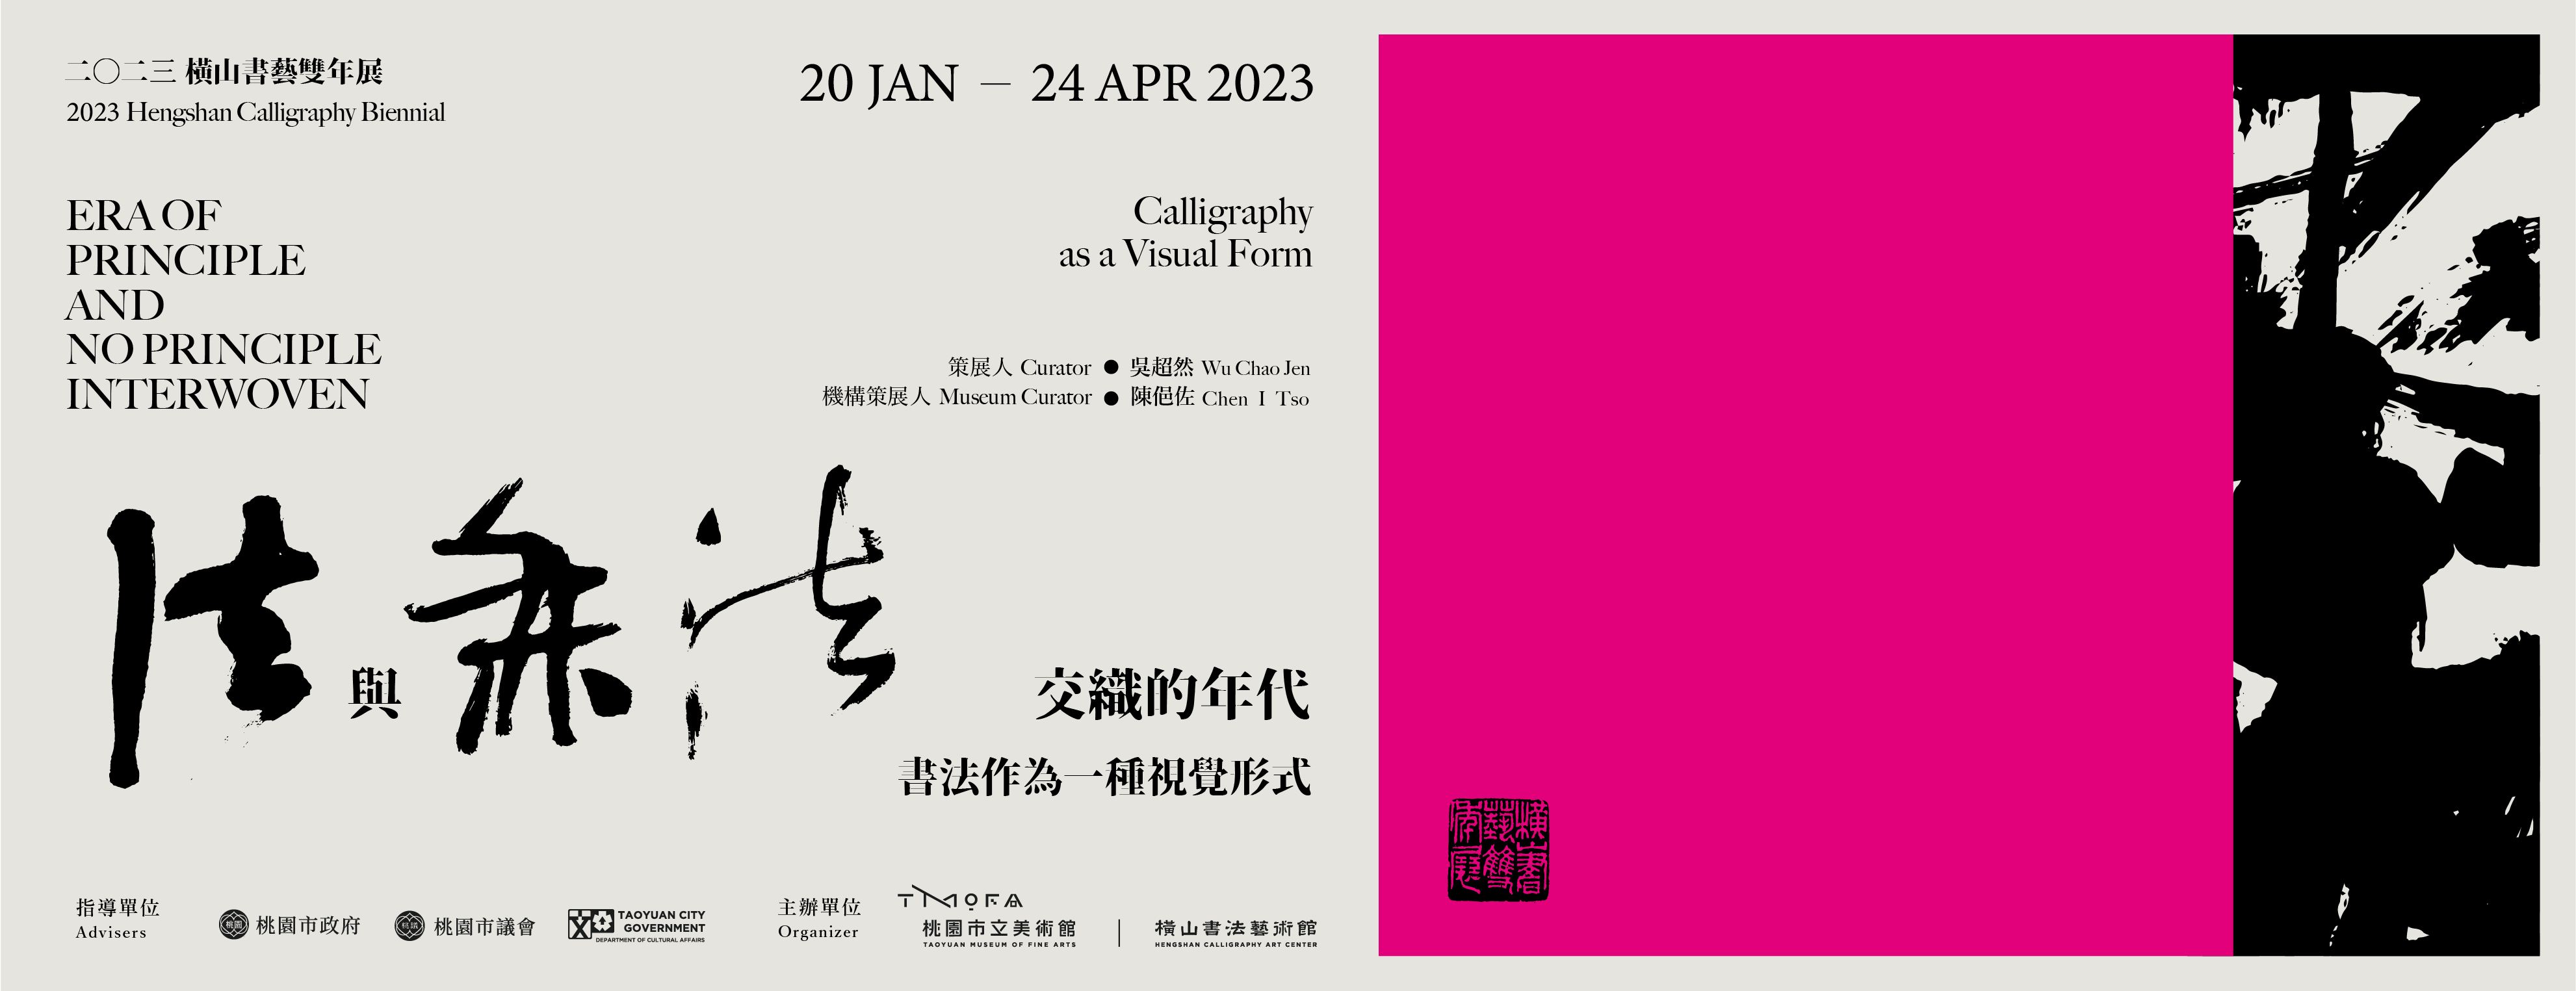 2023 Hengshan Calligraphy Biennial: Era of Principle and No Principle Interwoven—Calligraphy as a Visual Form